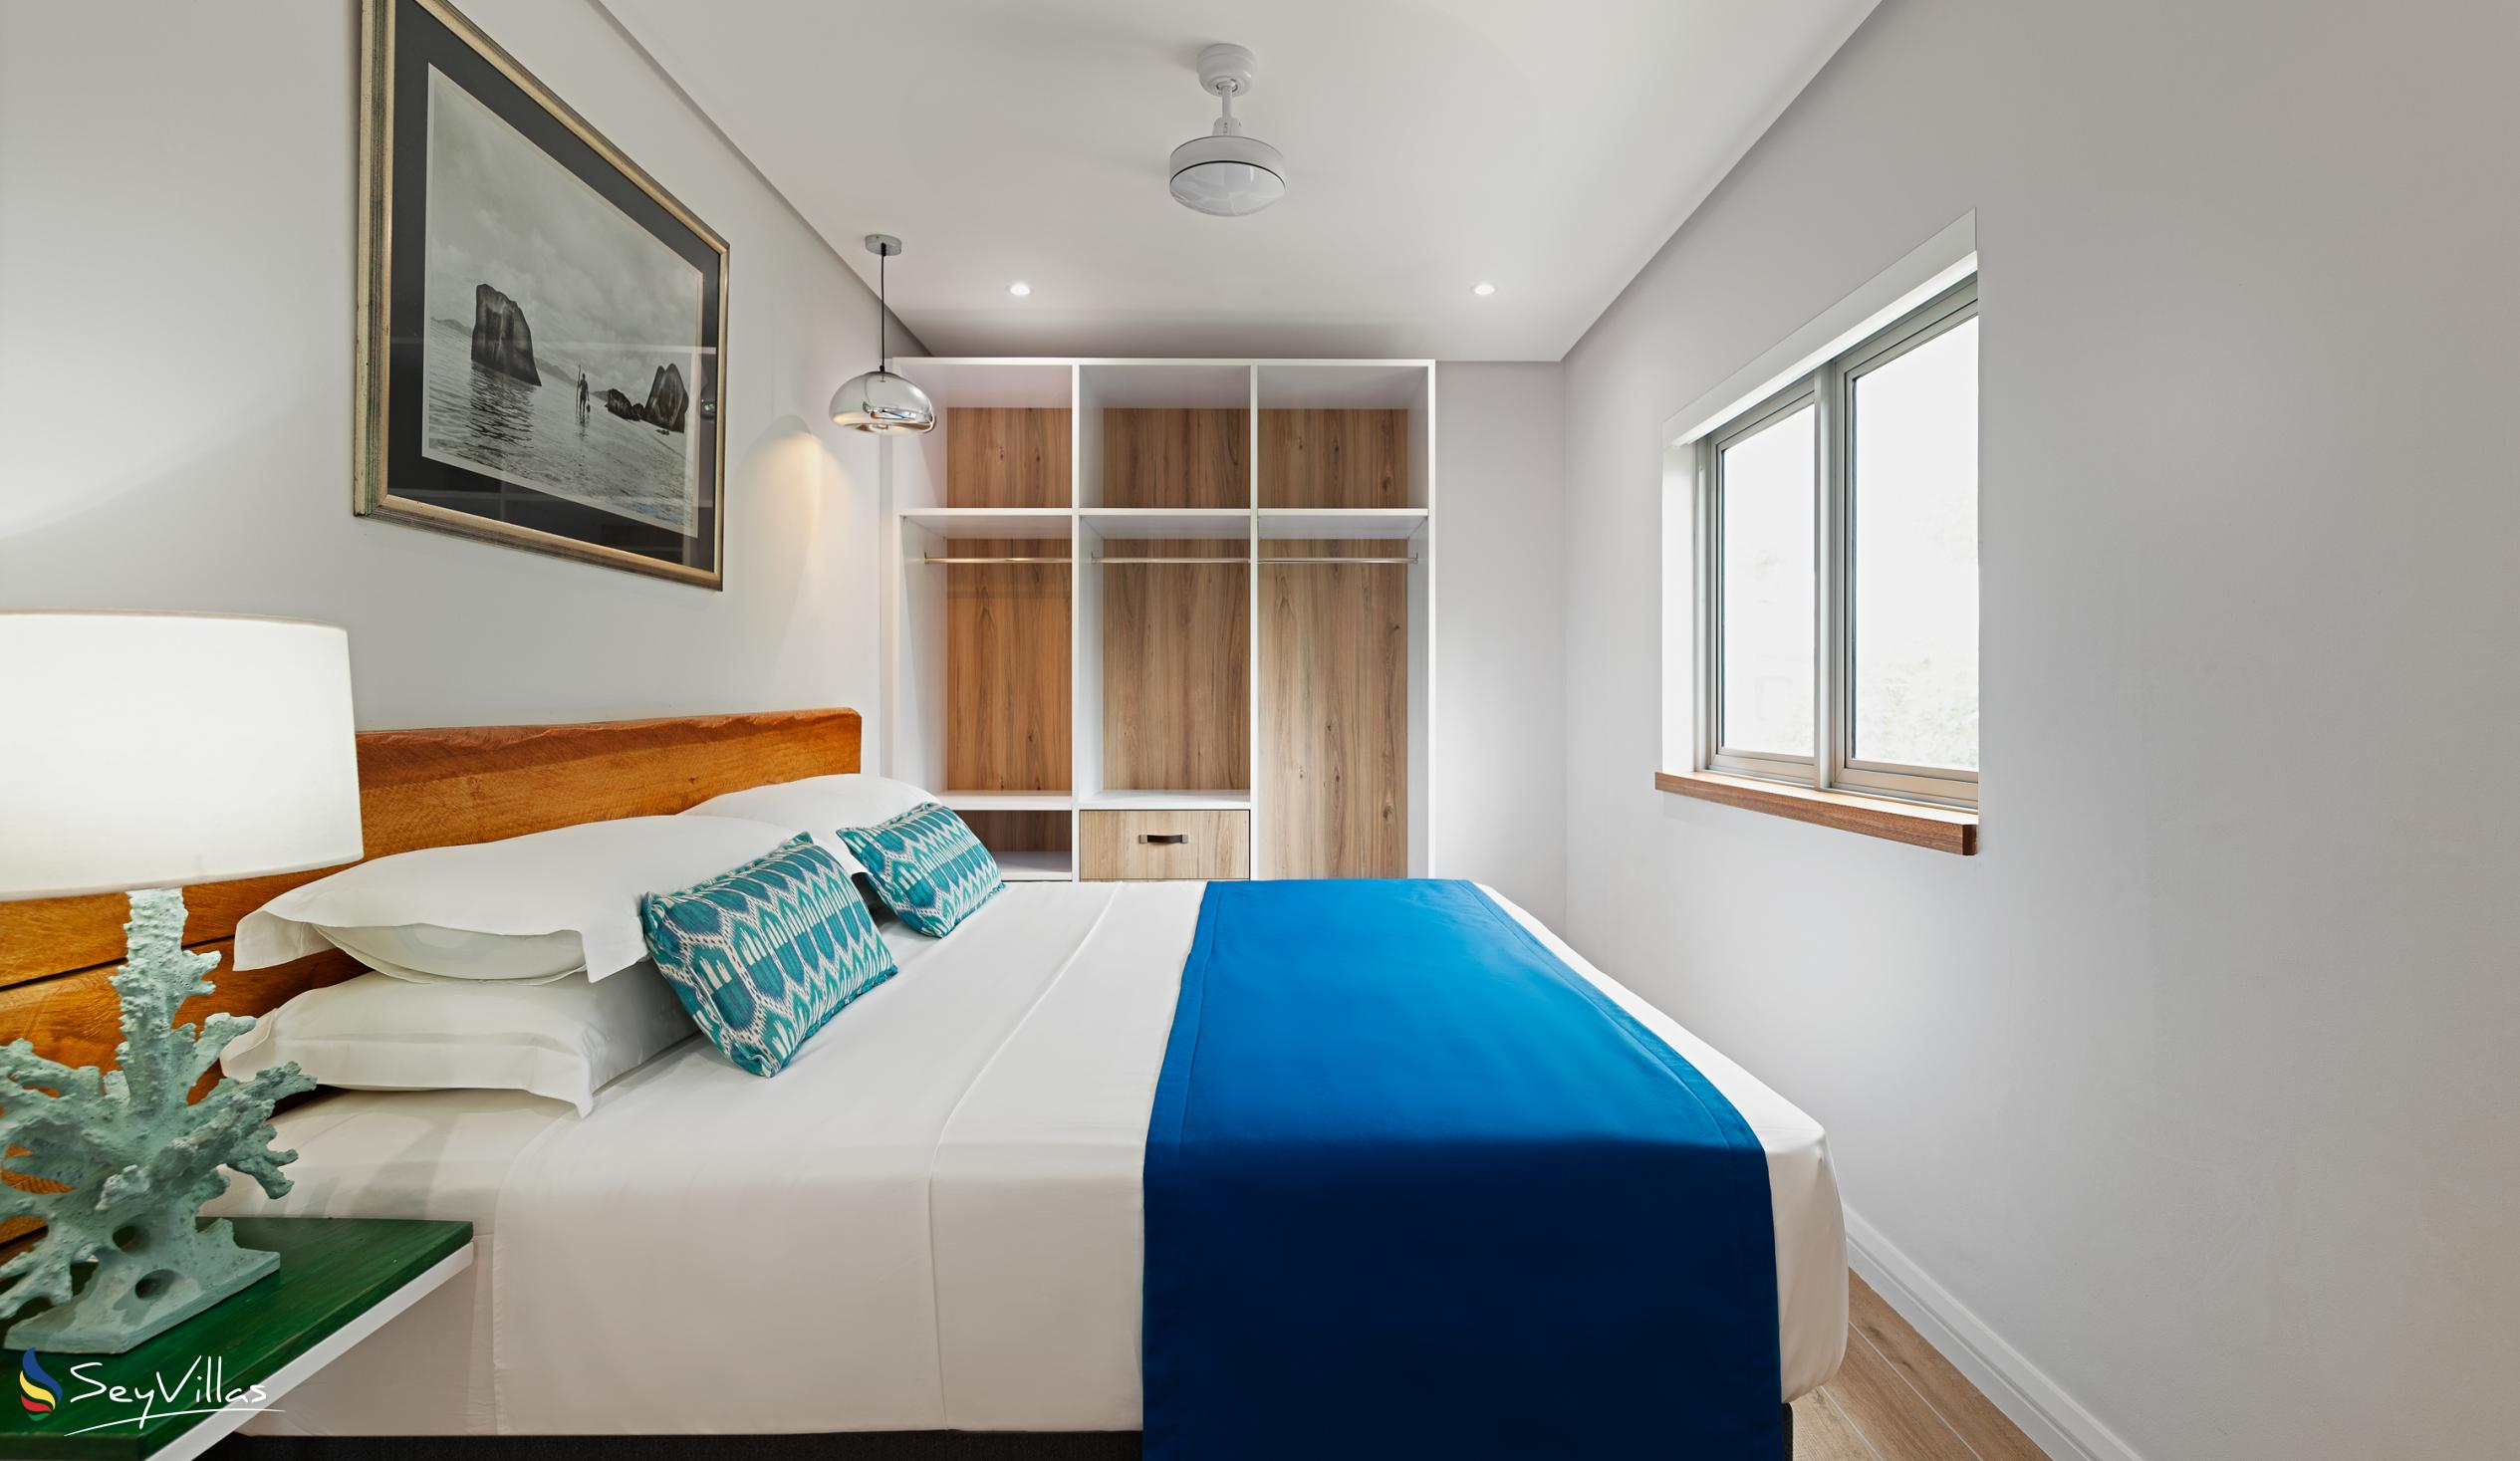 Photo 58: Sables d'Or Luxury Apartments - 1-Bedroom Apartment - Annex B - Mahé (Seychelles)